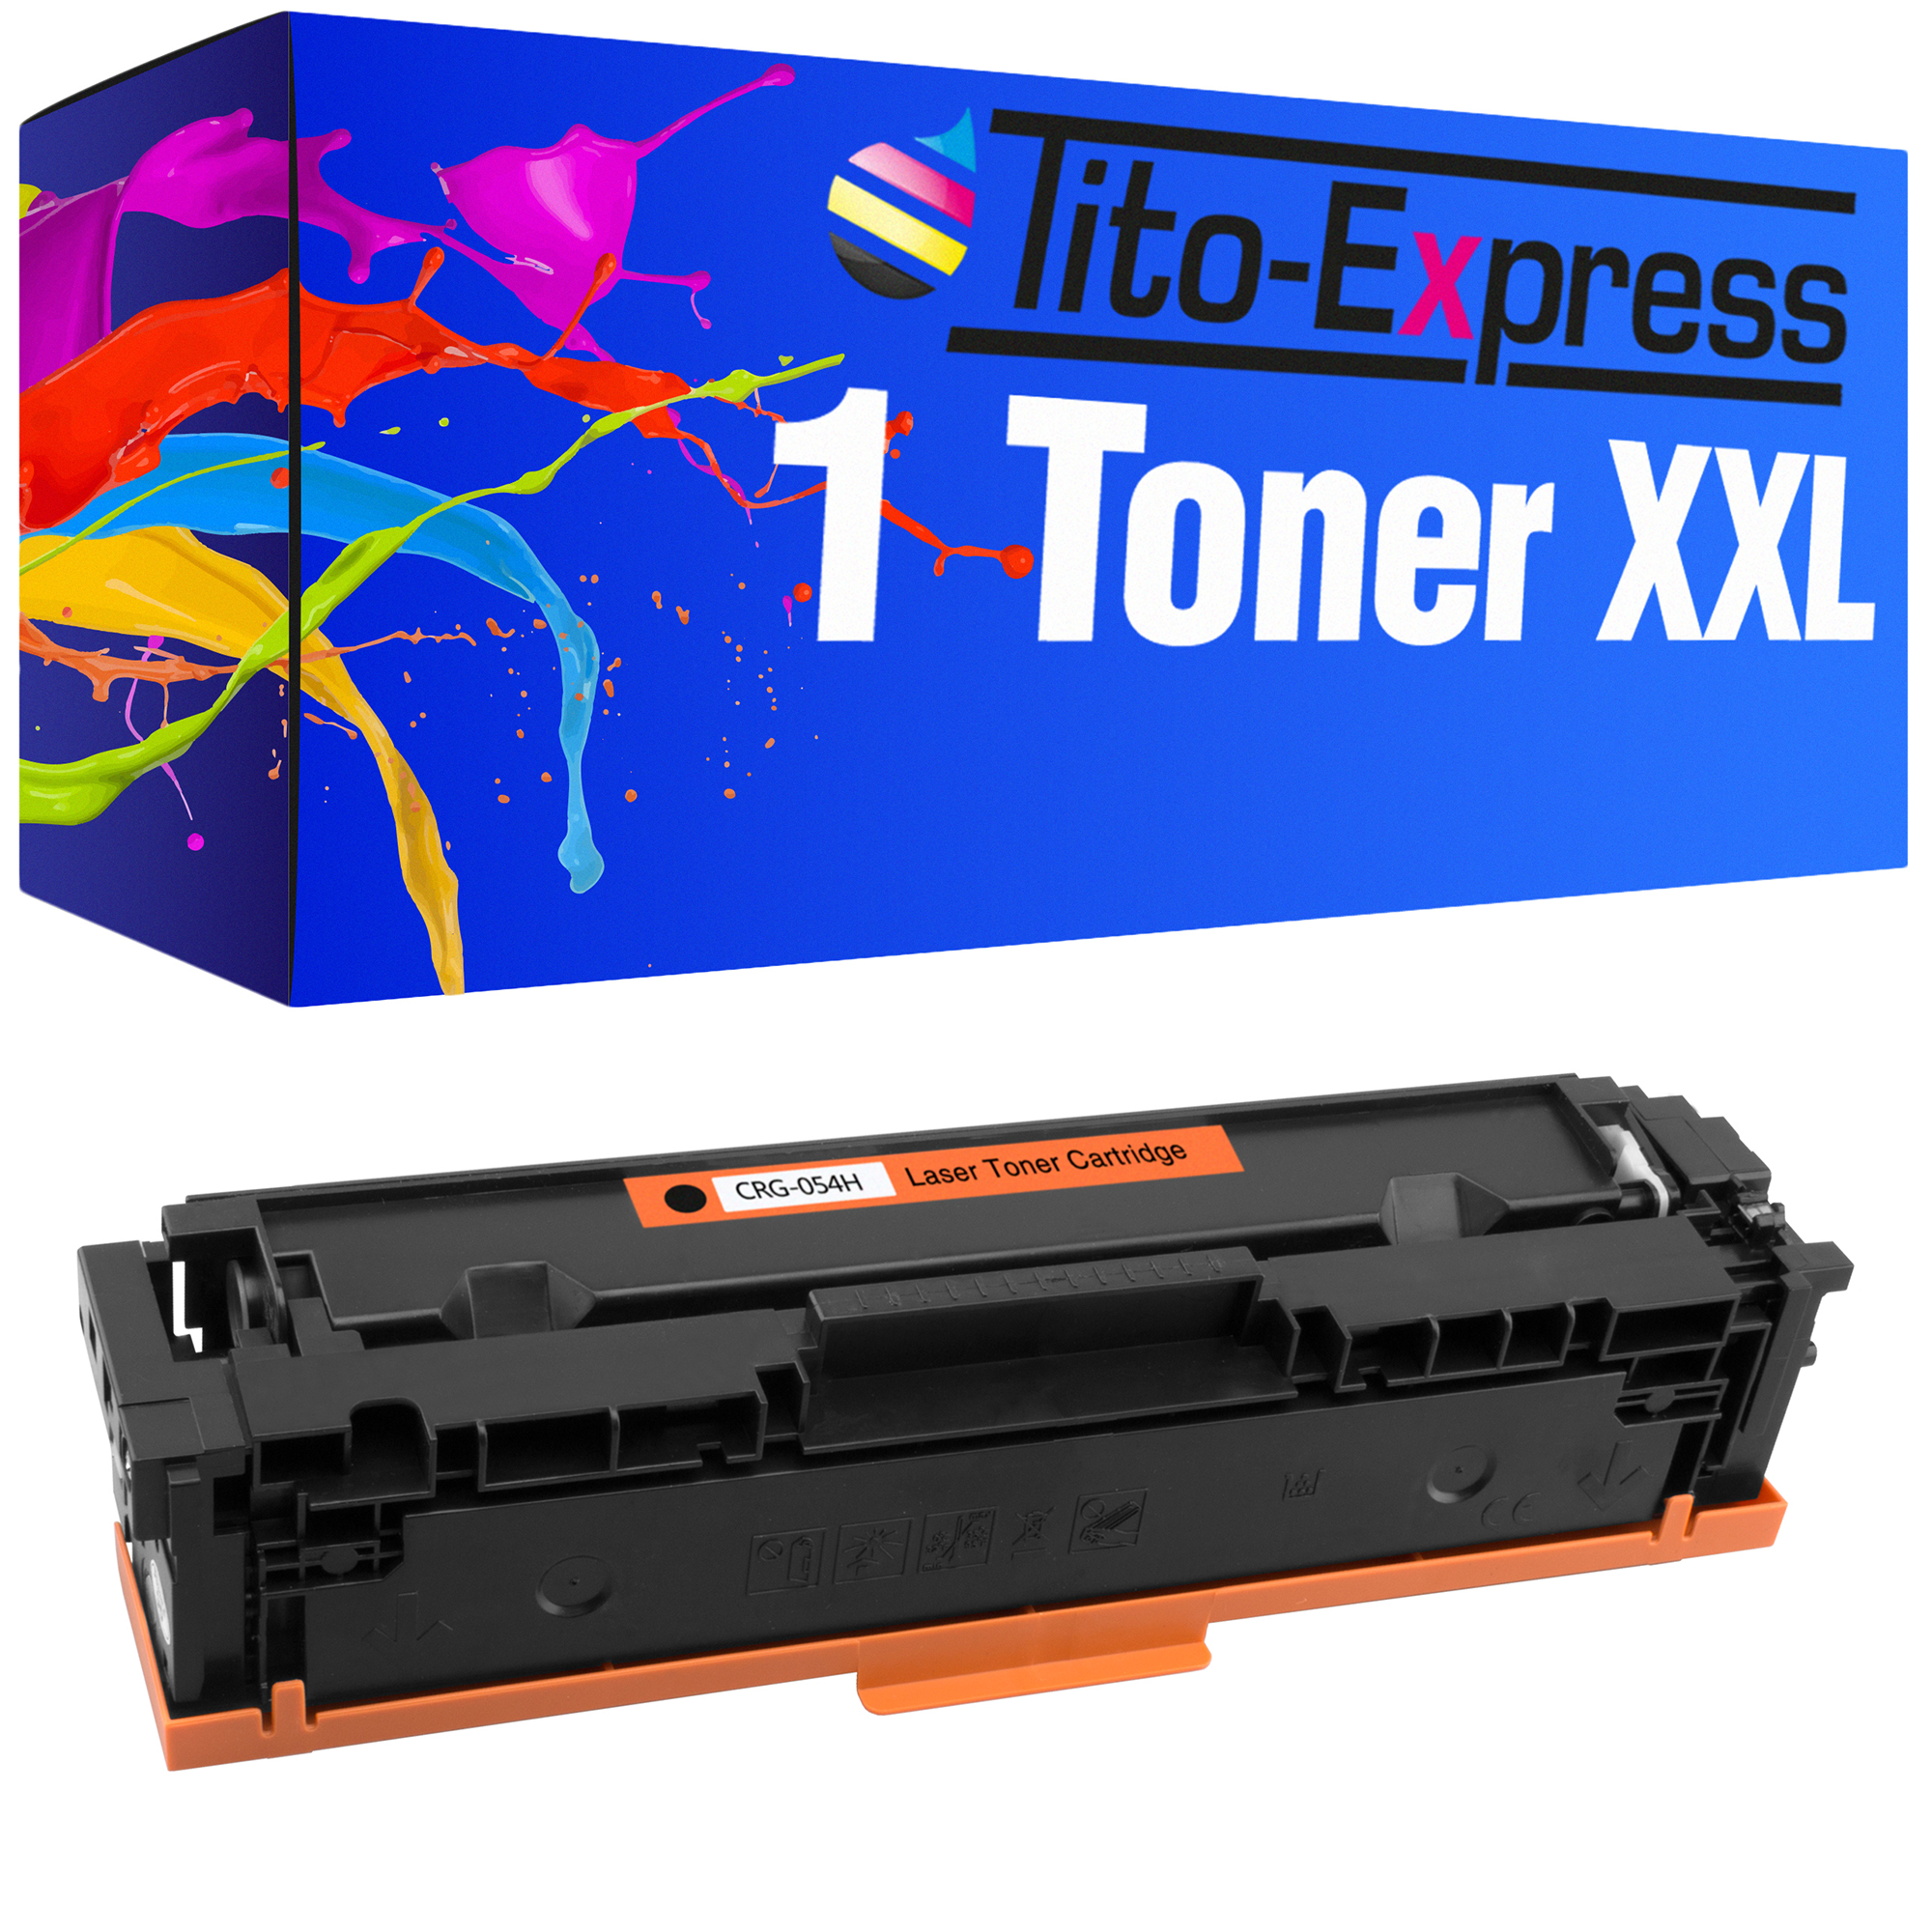 TITO-EXPRESS PLATINUMSERIE 1 Toner Toner CRG-054H ersetzt Canon black (CRG054H)